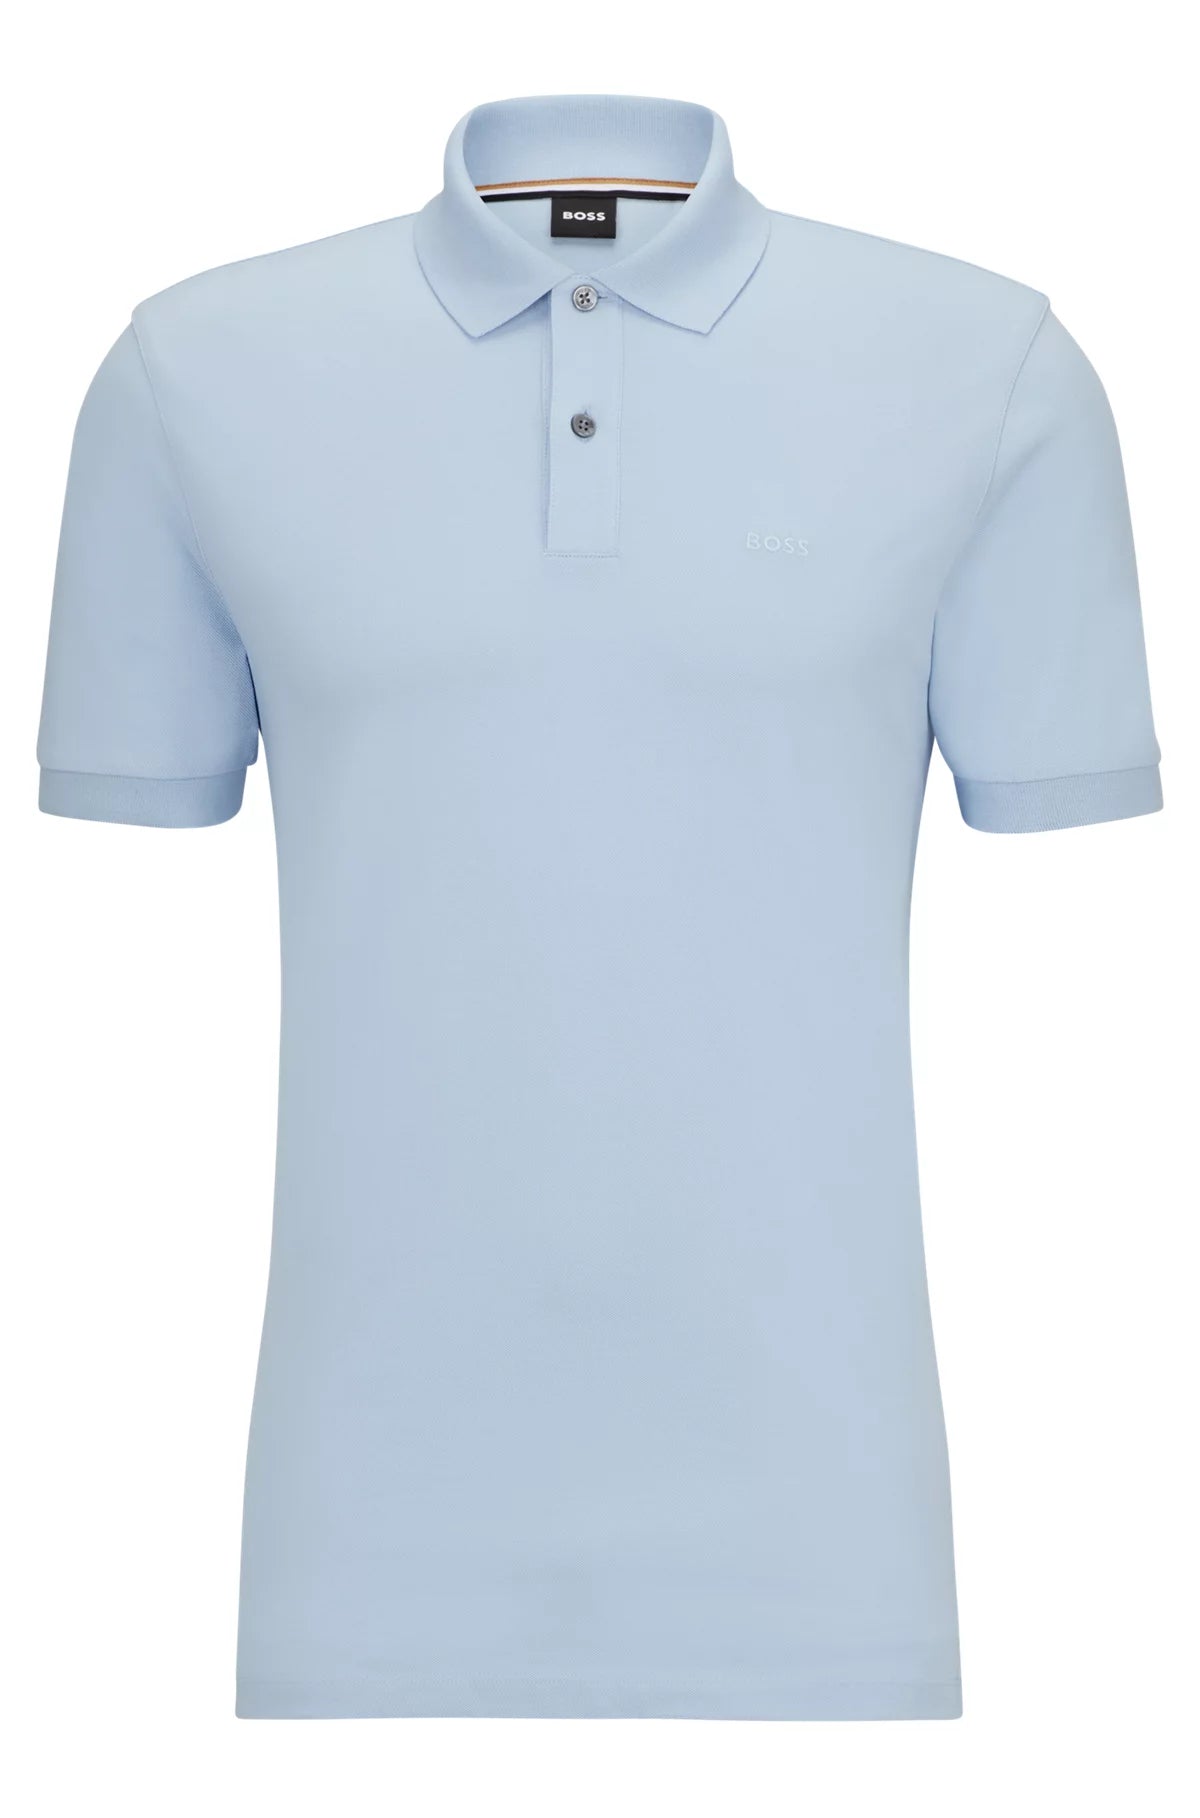 Polo homme logo brodé BOSS bleu clair en coton bio | Georgespaul